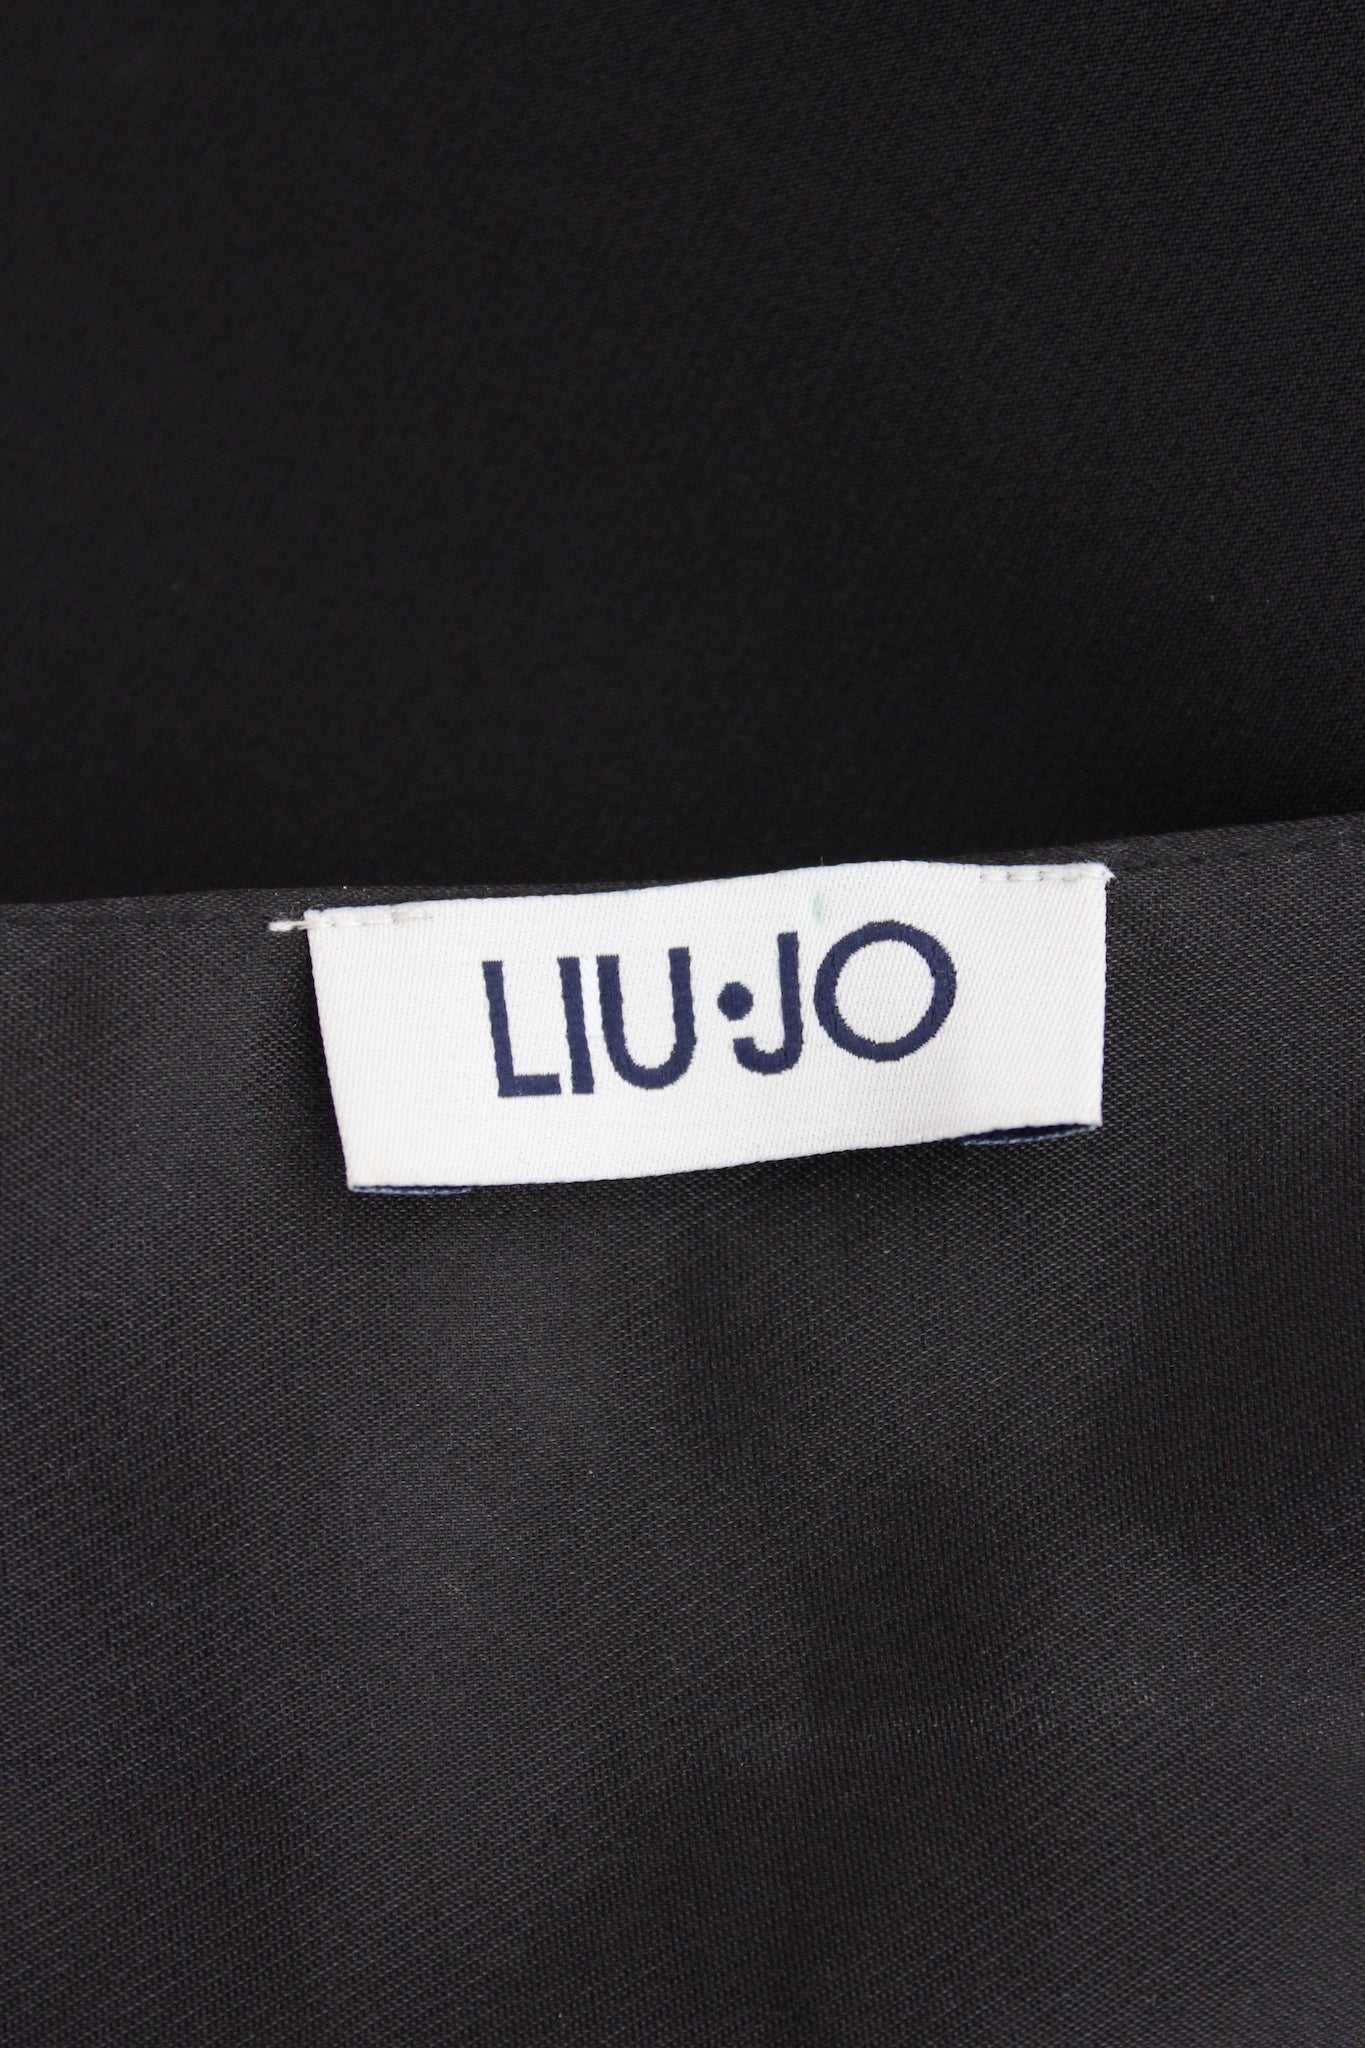 Liu Jo Black Stones Evening Shirt 2000s